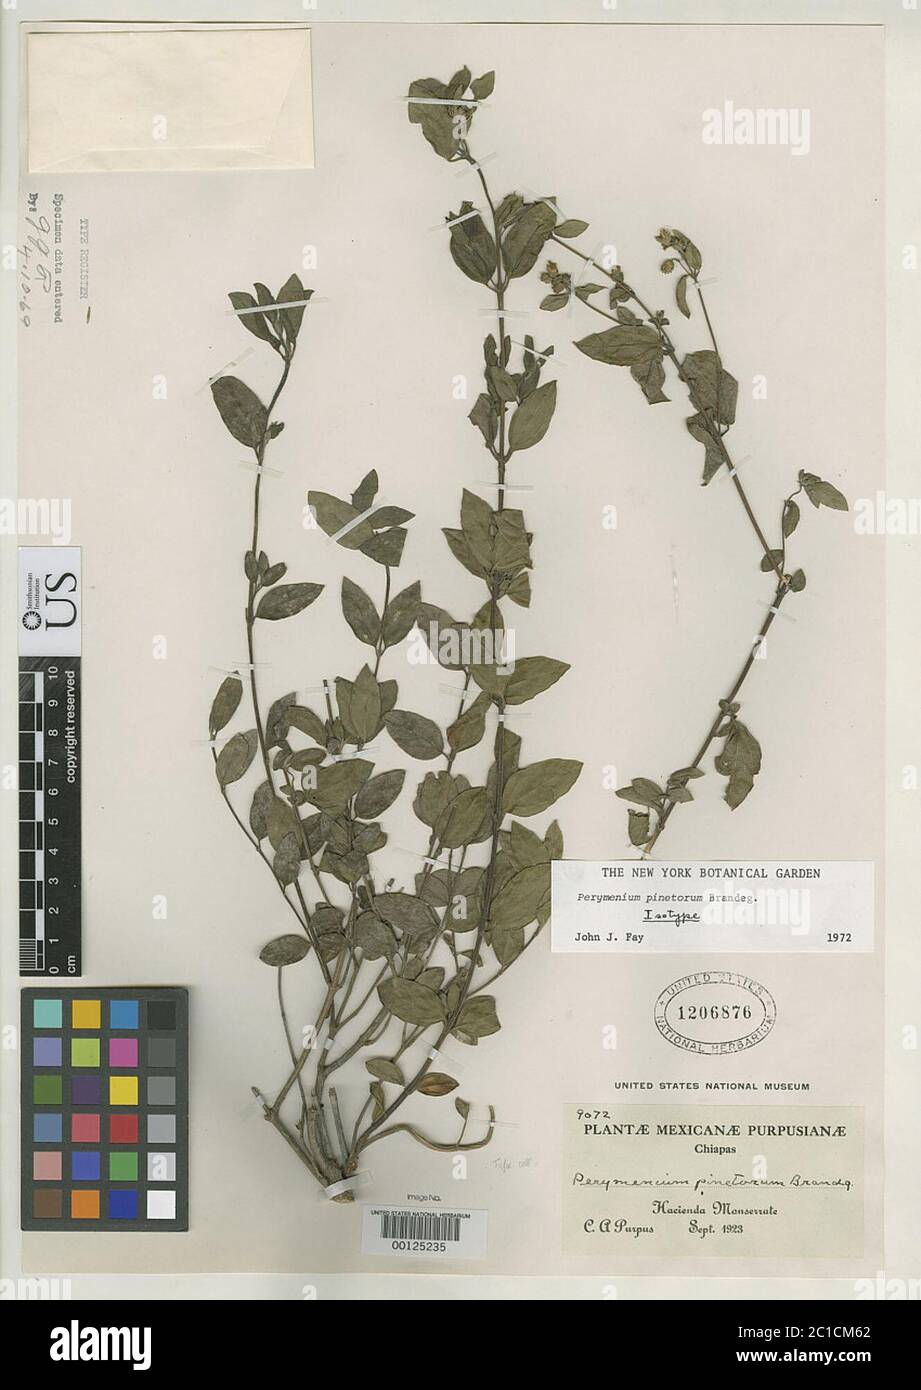 Perymenium pinetorum Brandegee Perymenium pinetorum Brandegee. Stock Photo